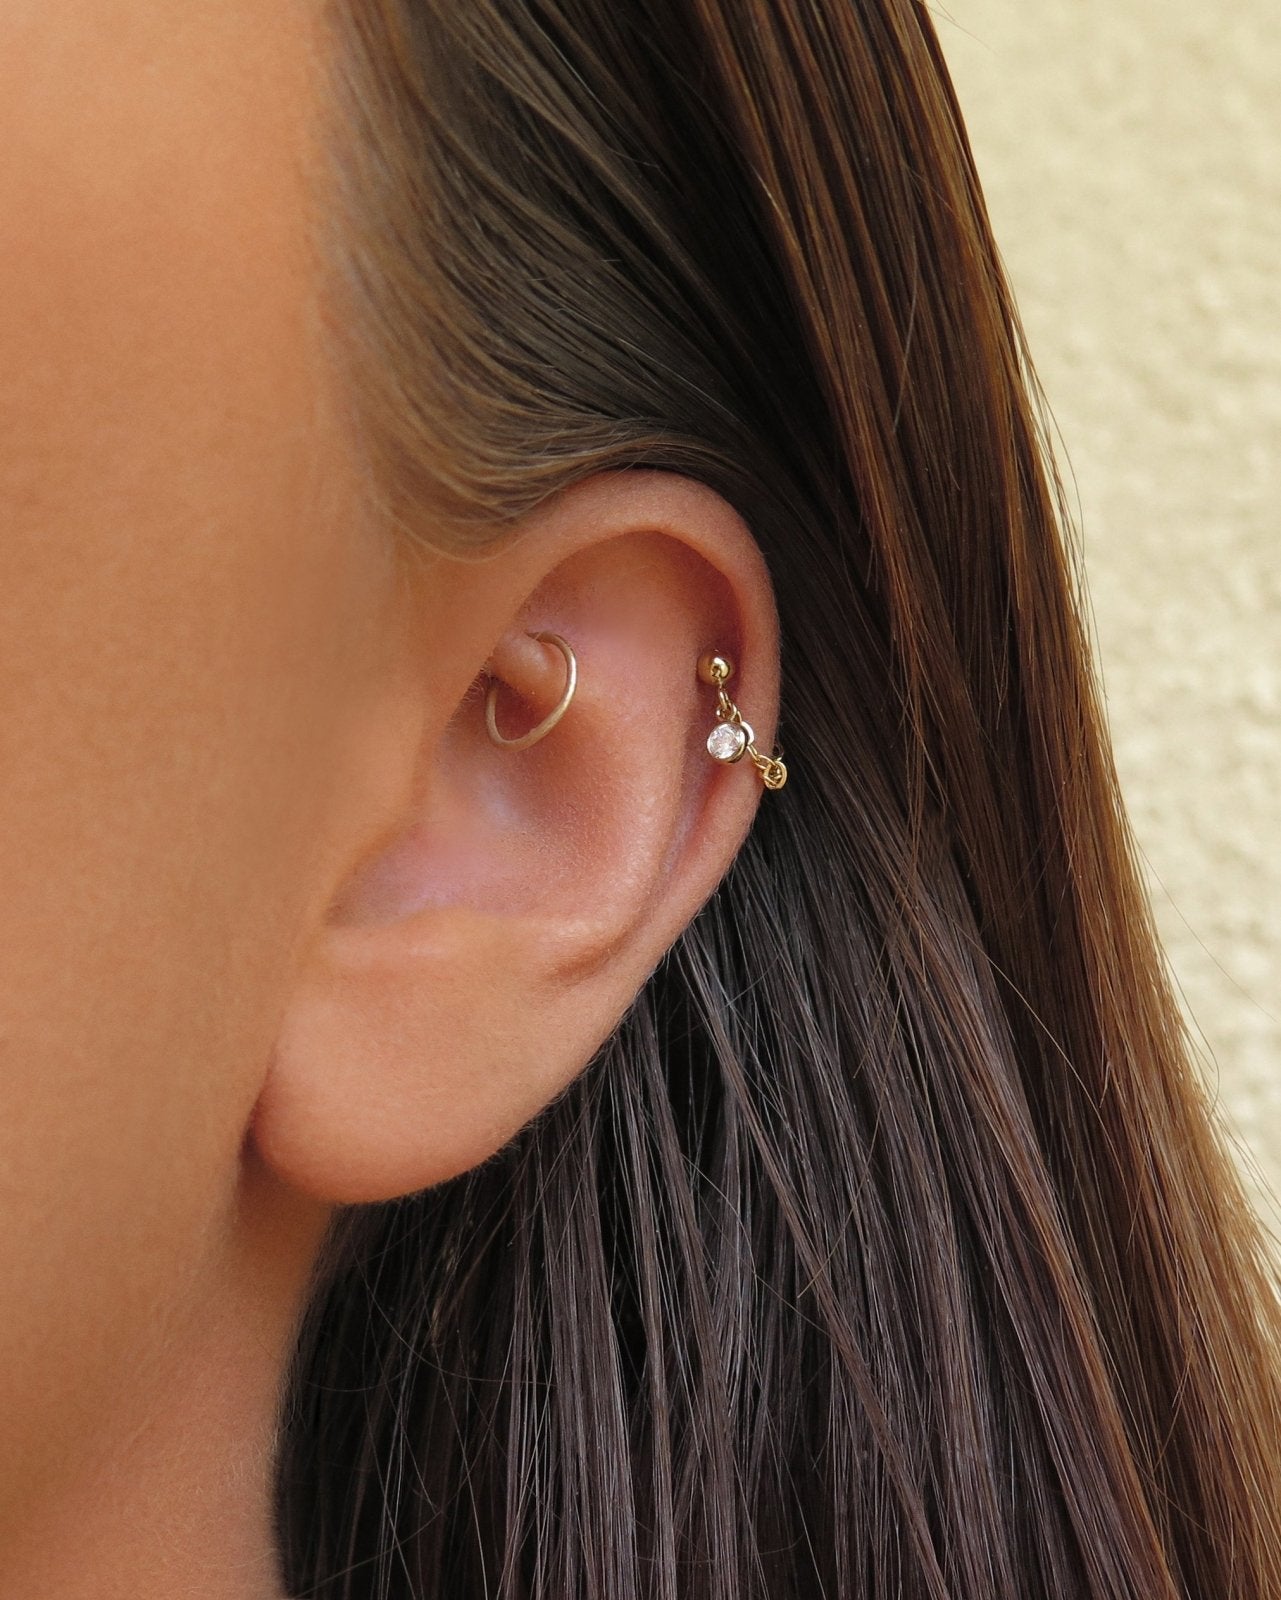 Update 199+ helix earrings white gold